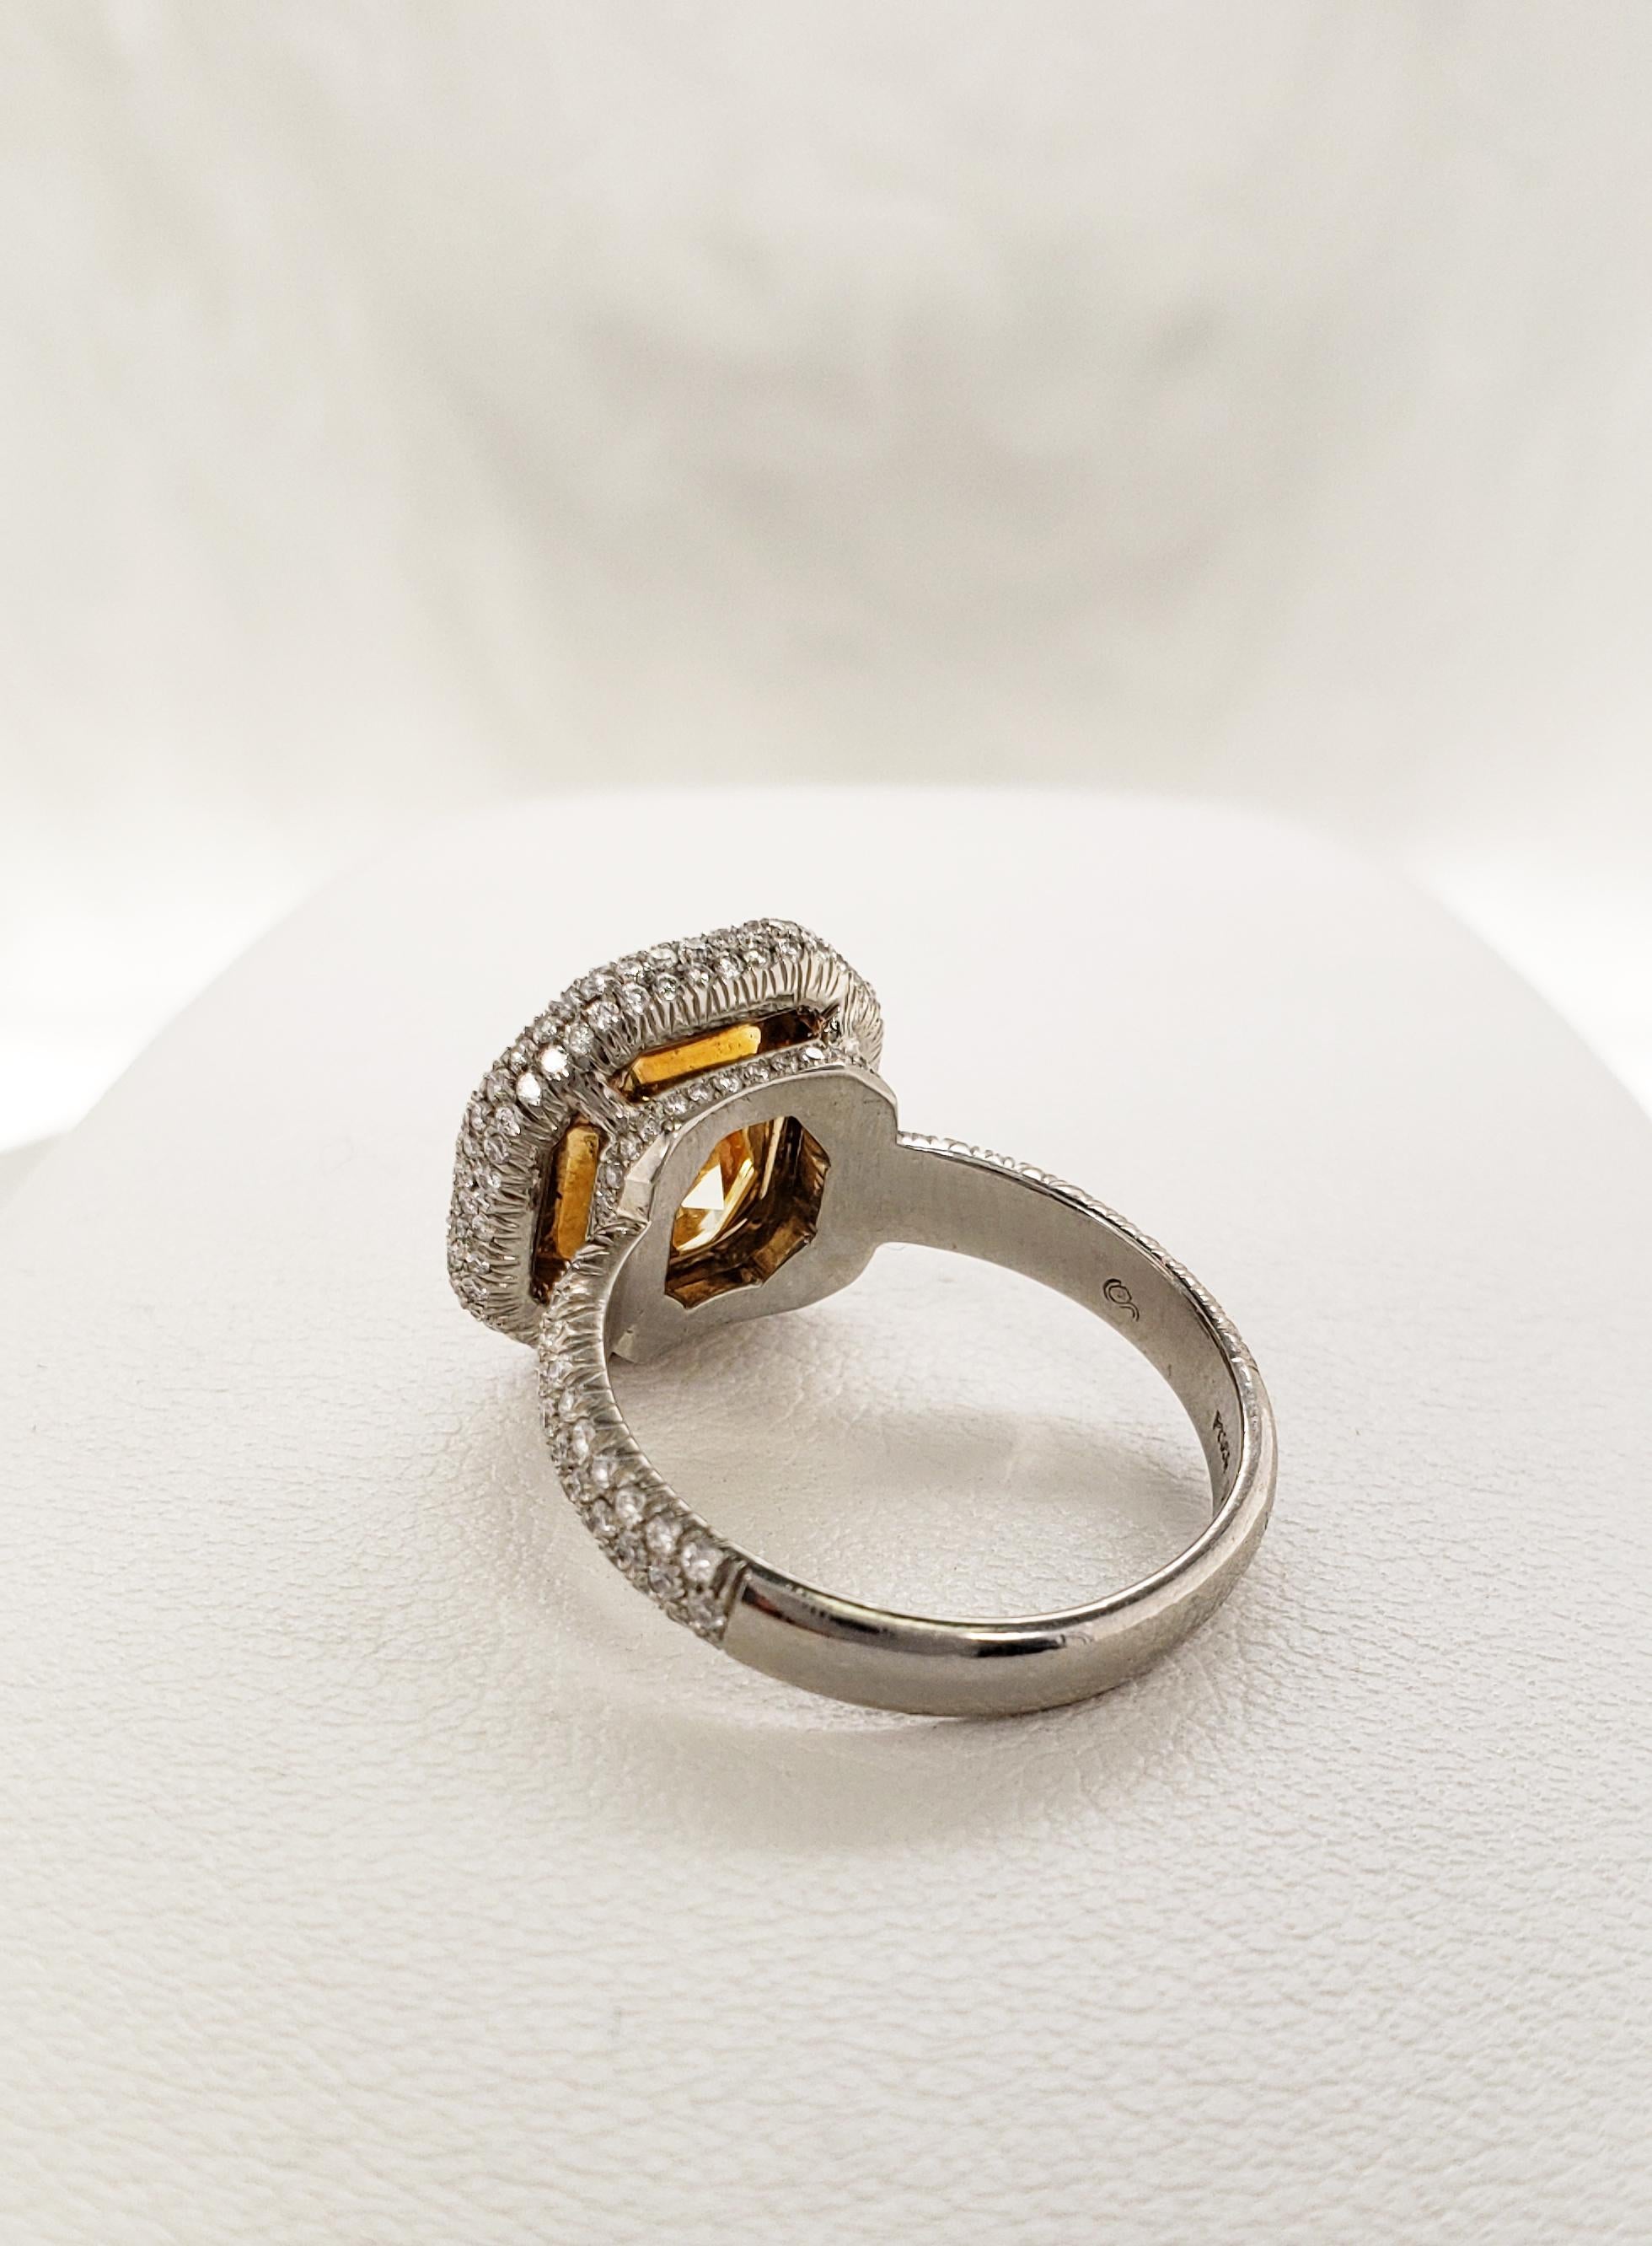 Contemporary Scarselli 4 carat Yellow Radiant Cut Diamond Engagement Ring in Platinum 